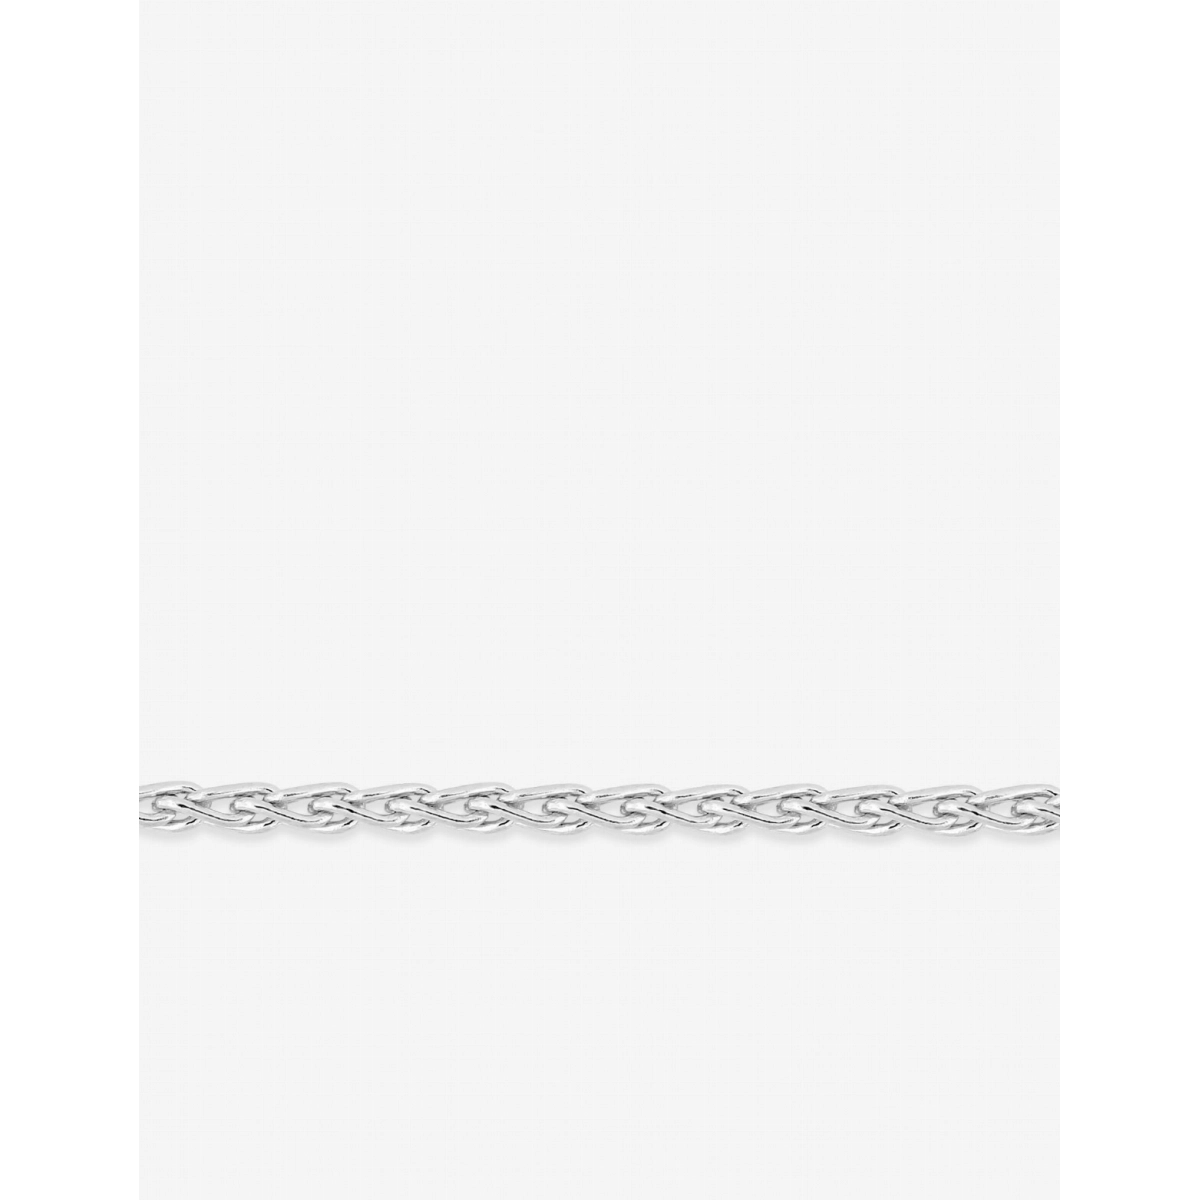 Bracelet 'spiga chain' 18K WG Lua Blanca  .US85M - Size 60